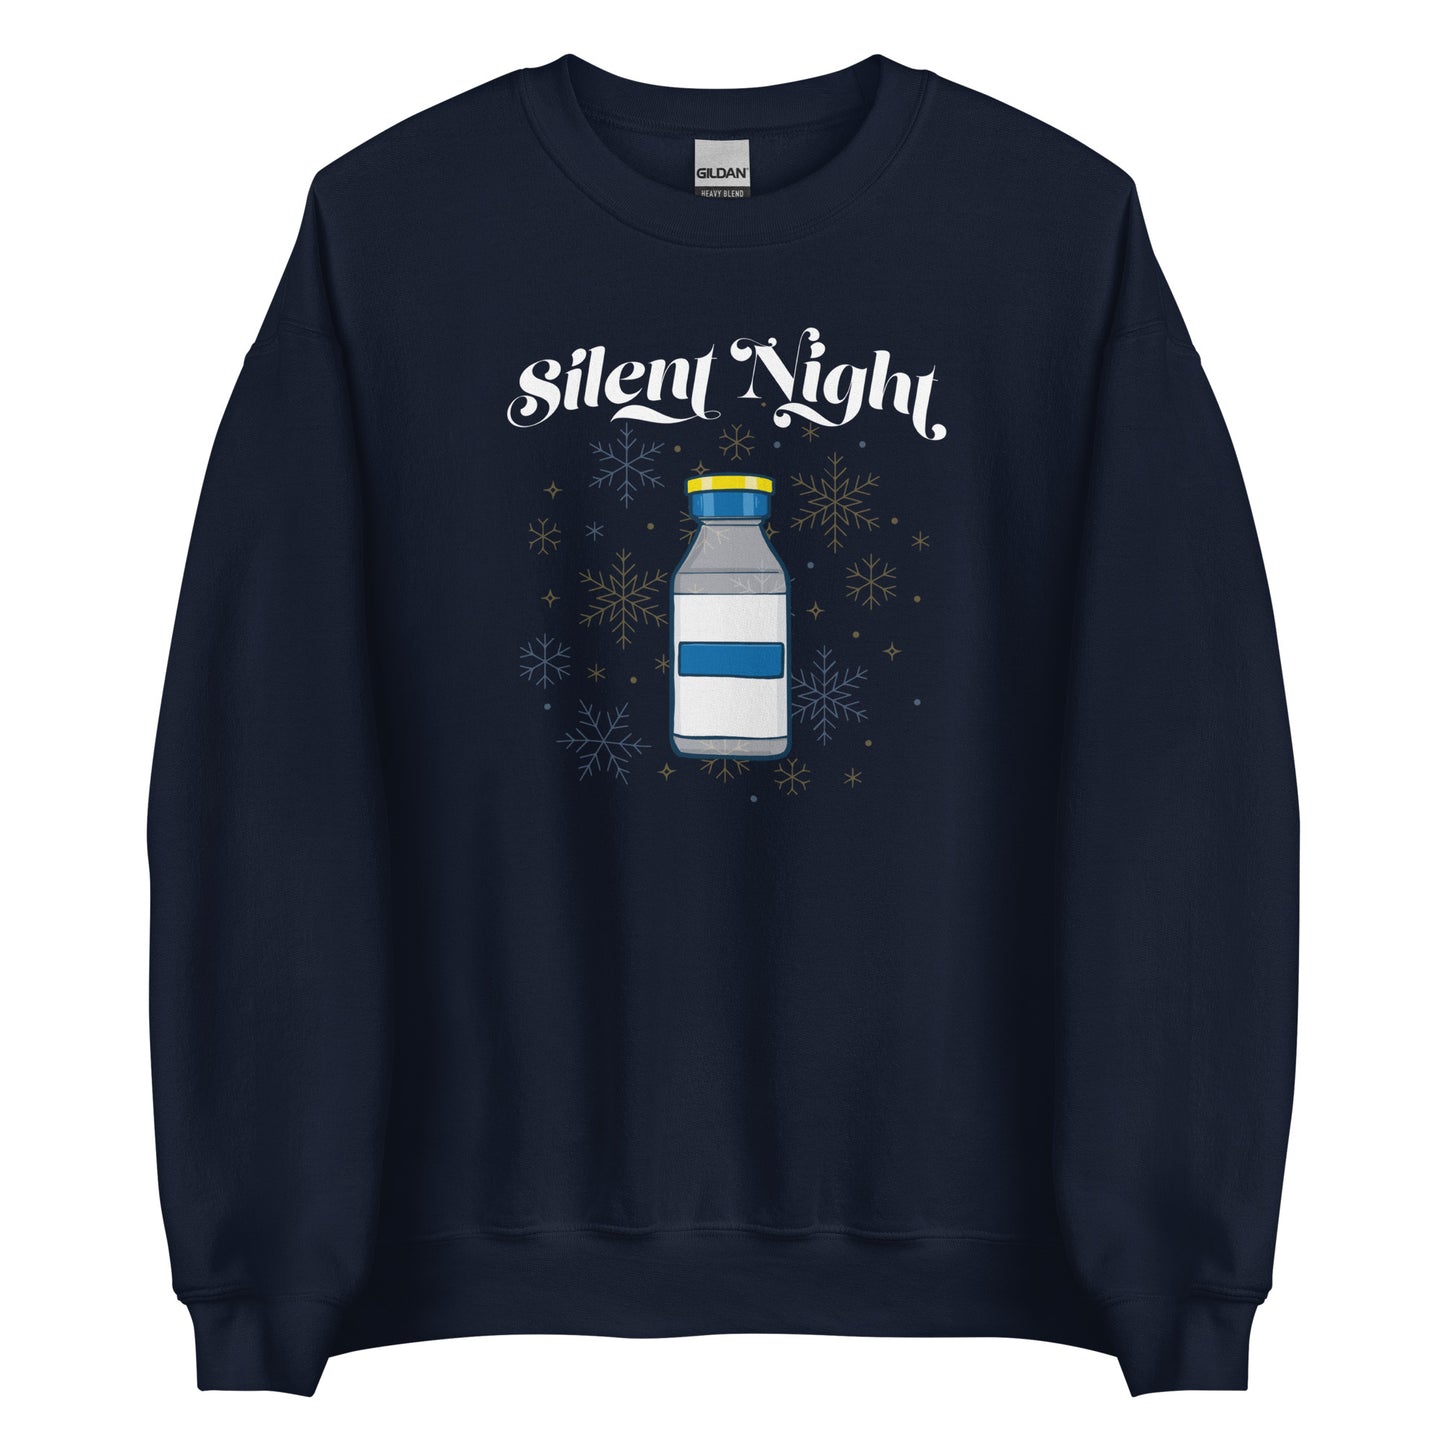 Silent Night Sweatshirt